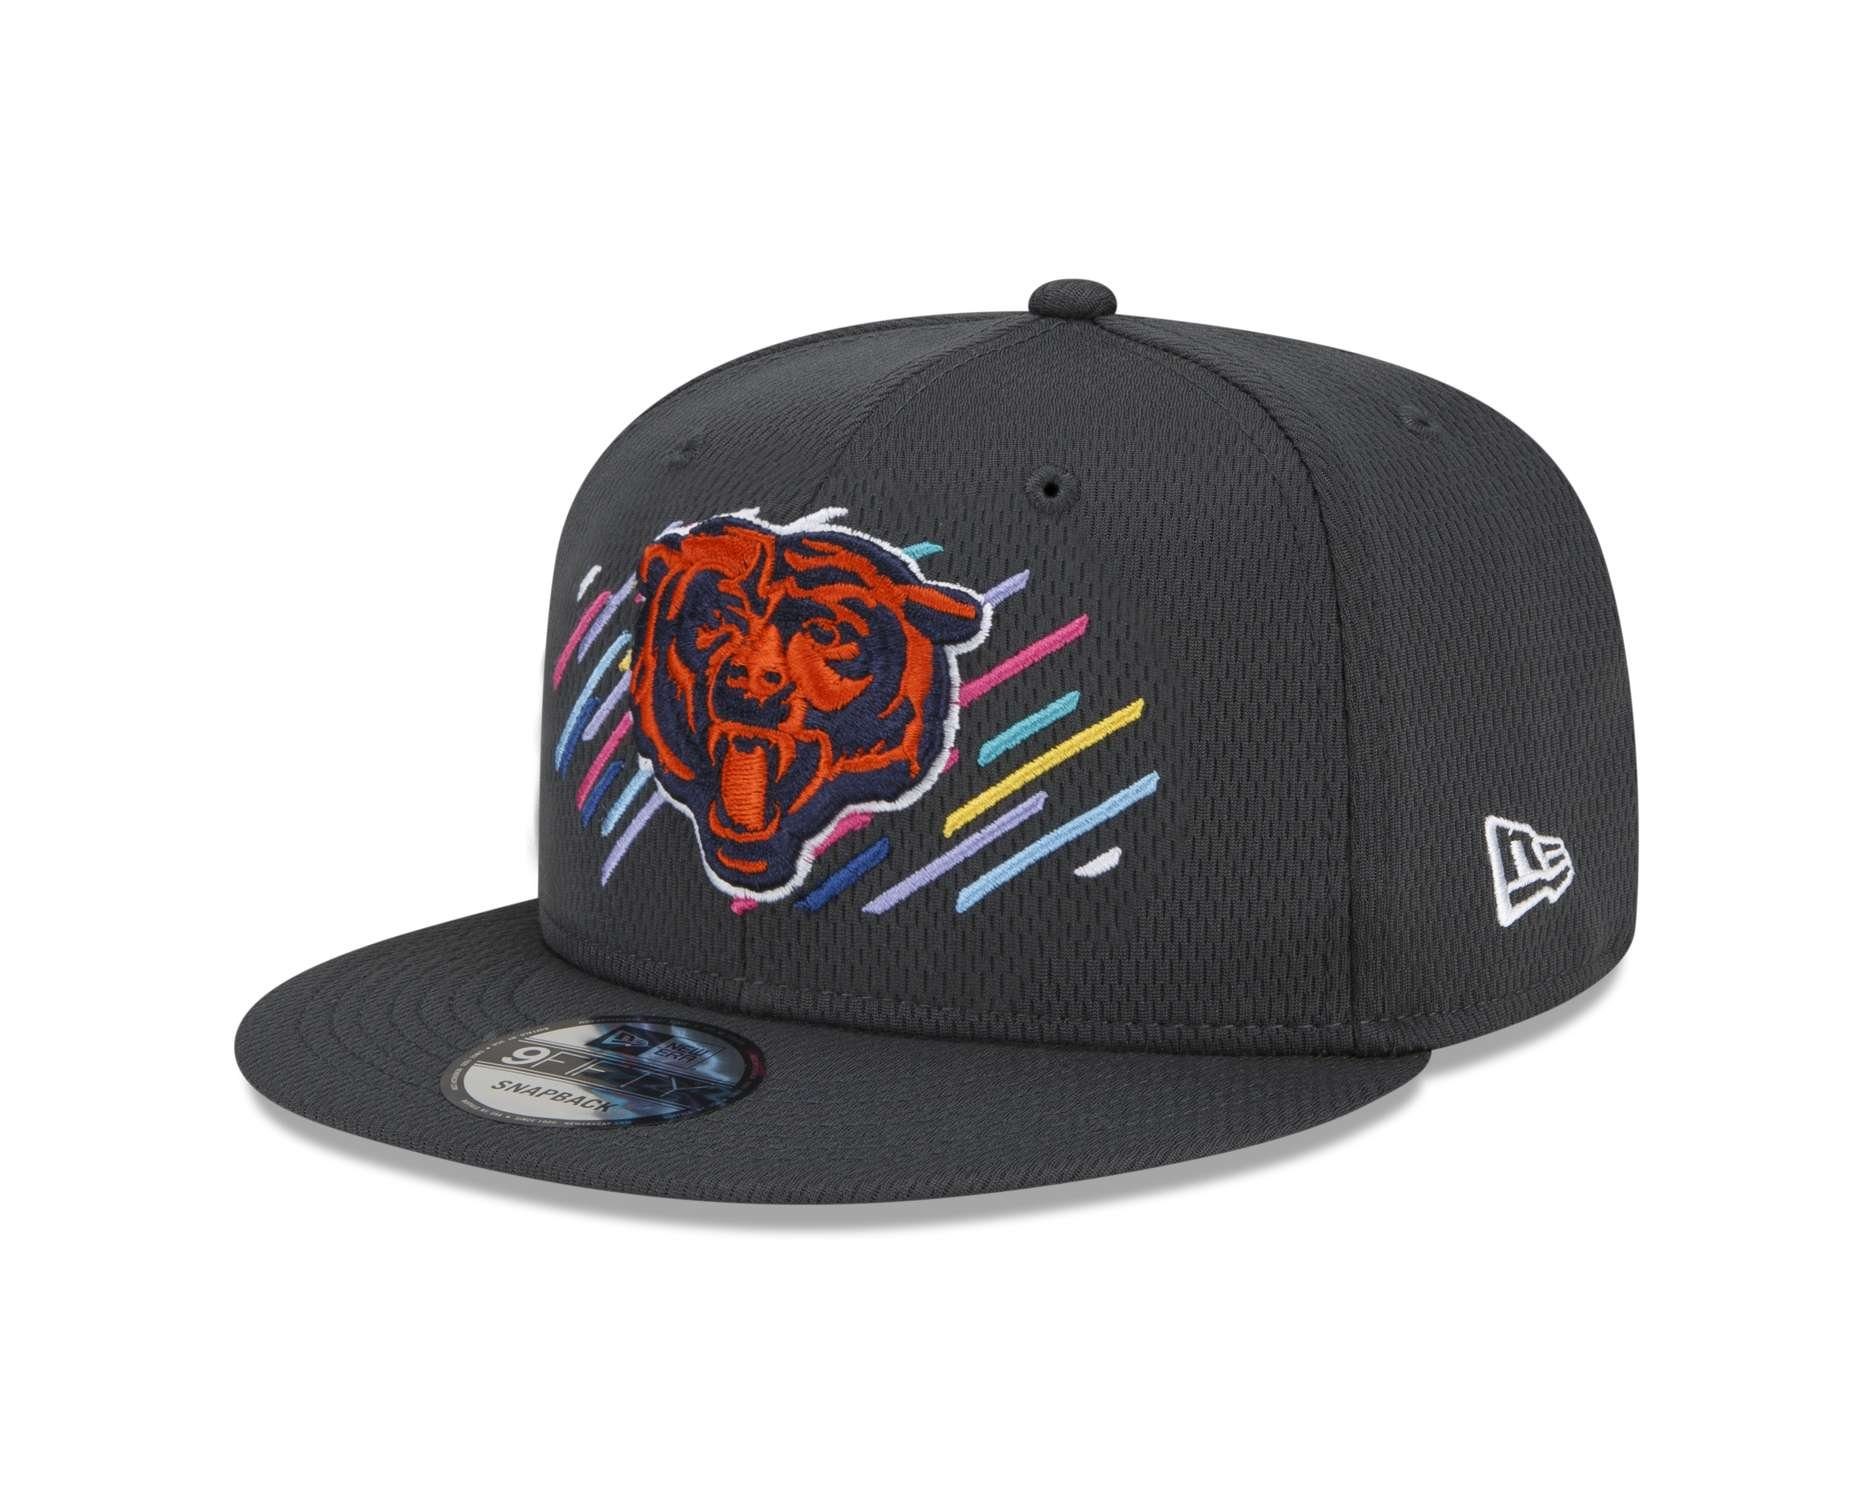 Sport Caps New Era Baseball Cap NFL Chicago Bears 2021 Crucial Catch 9Fifty